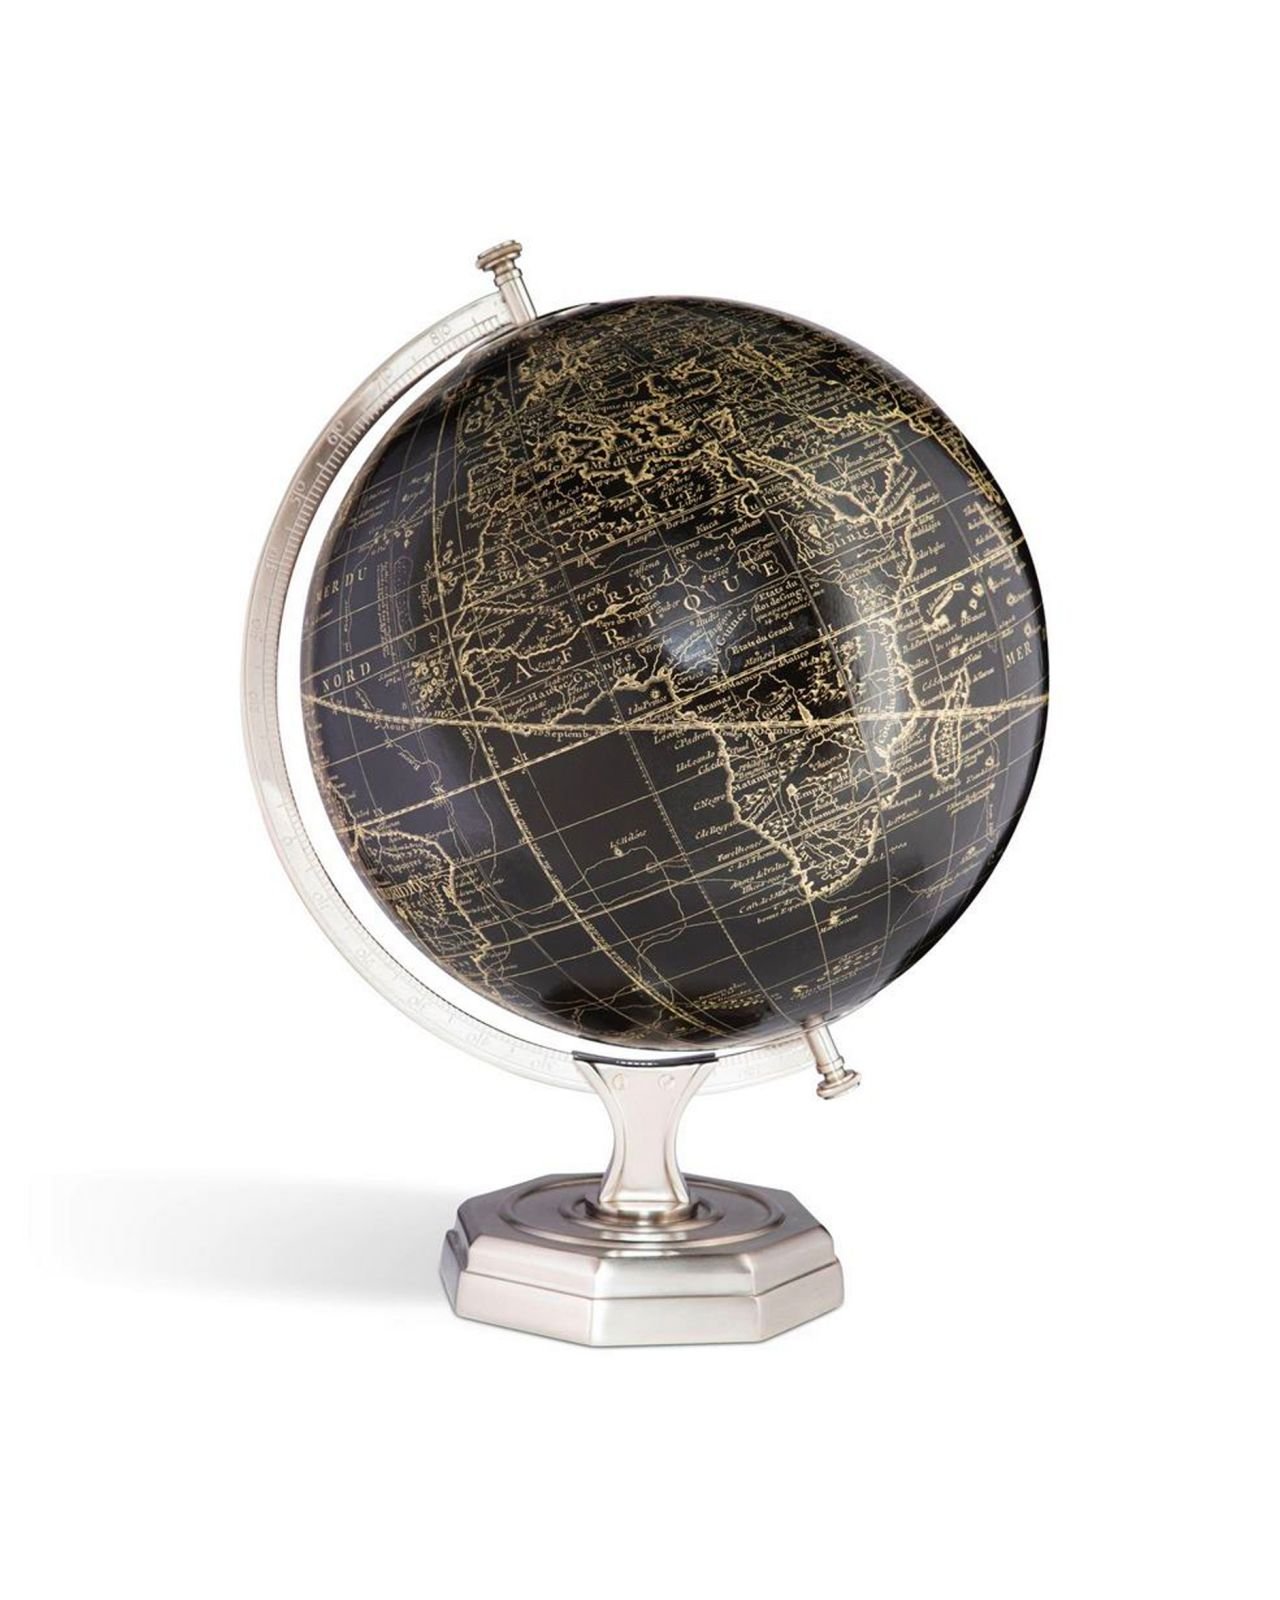 Vaugondy Vintage globe